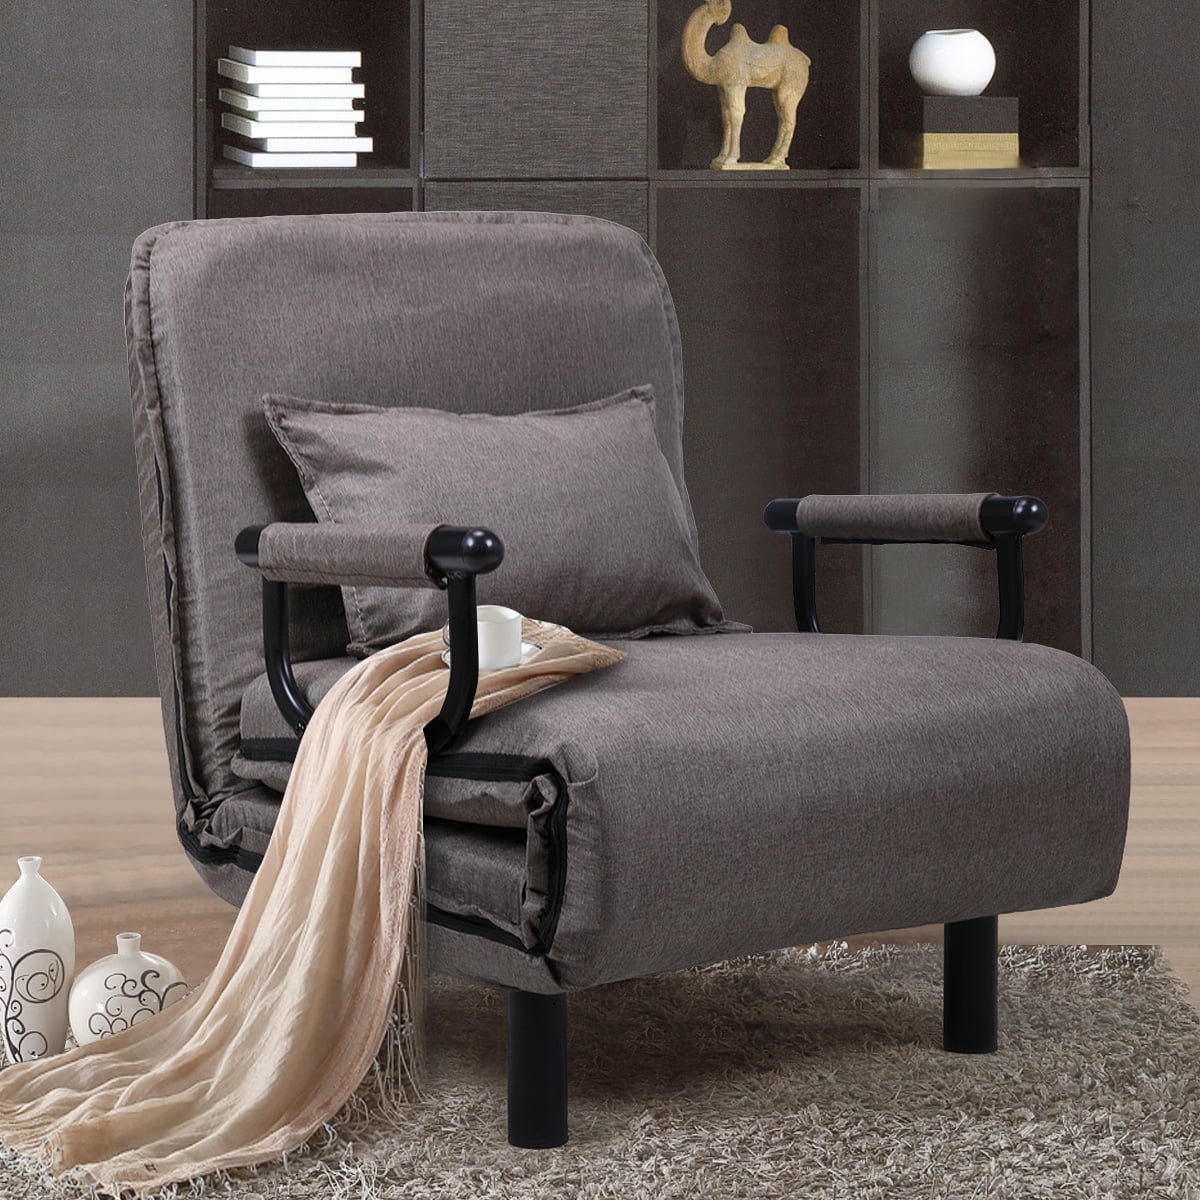 Veryke Sofa Bed, Floor Chair, Recliner Chair, Folding Lazy